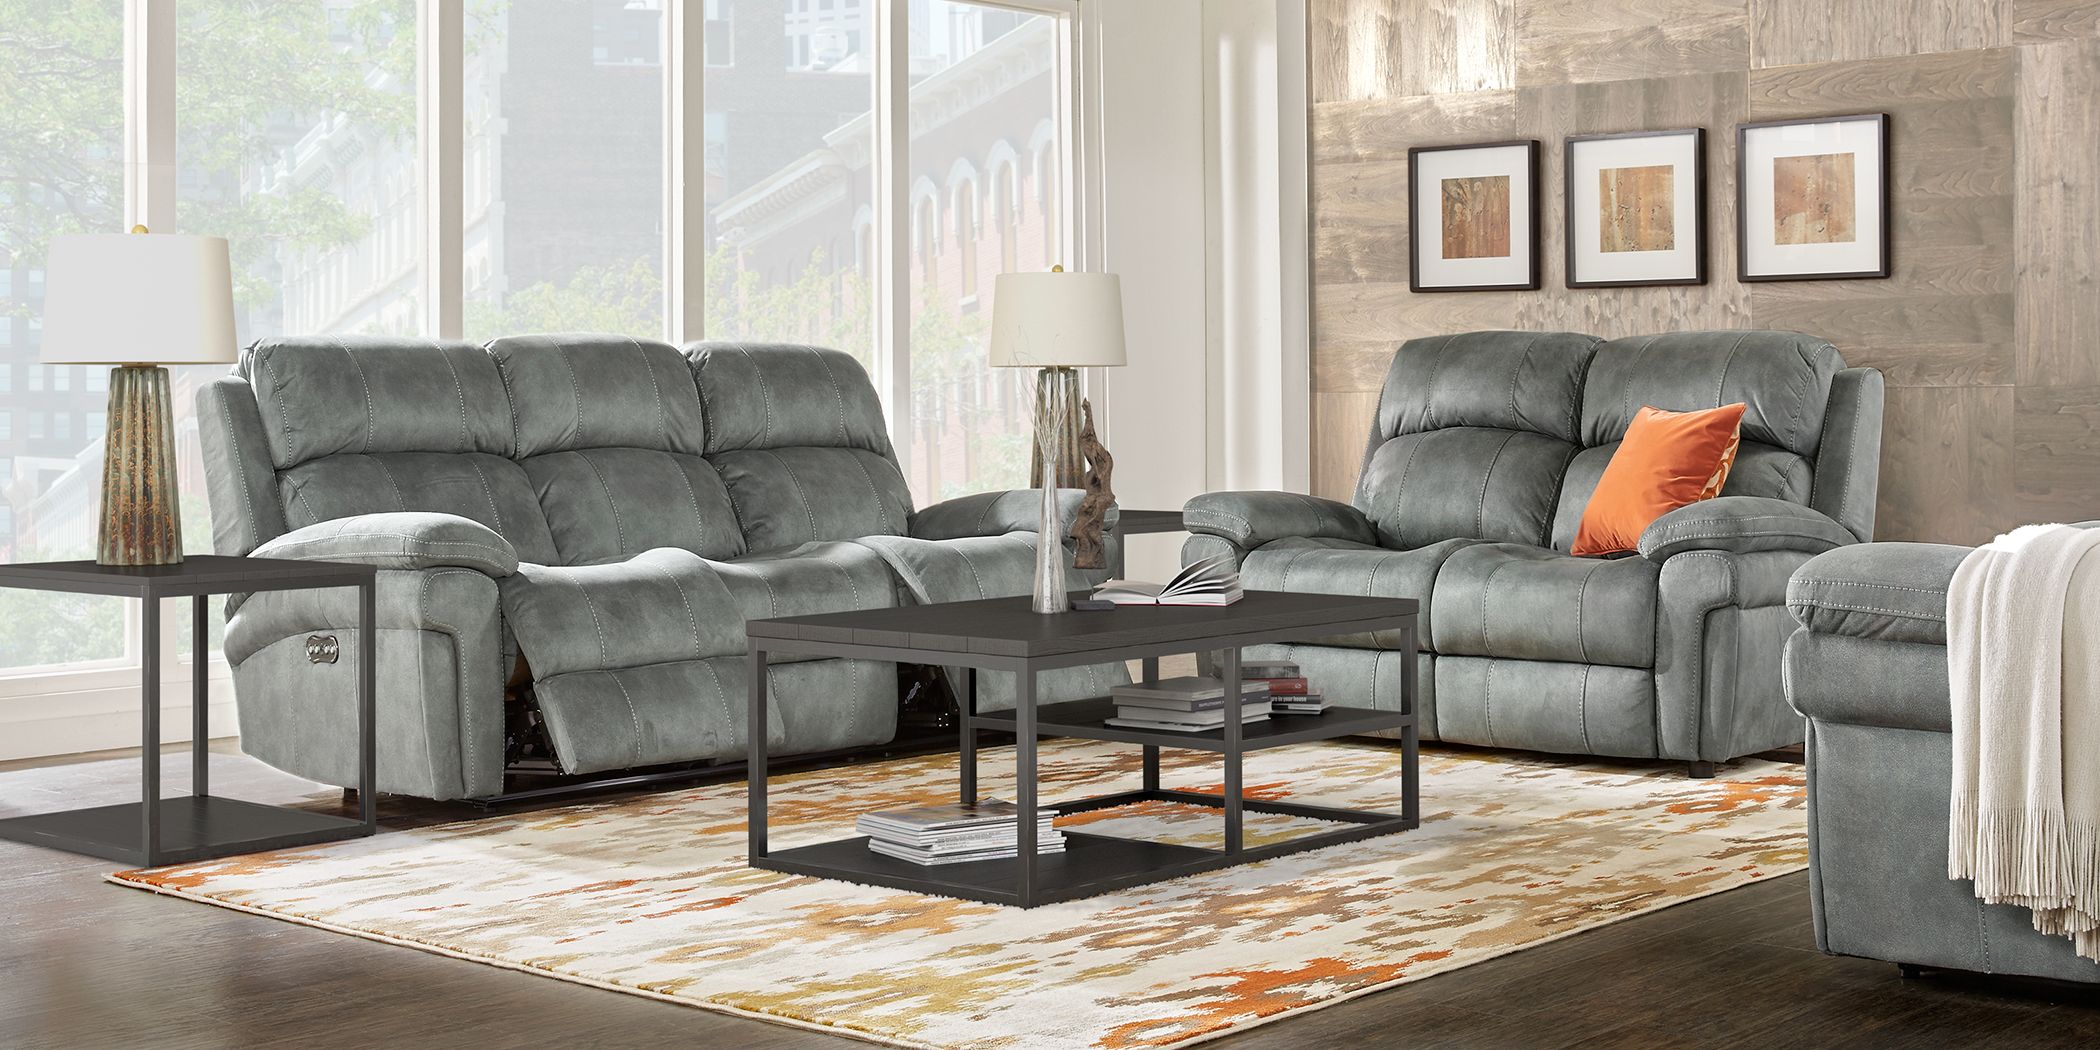 living room furniture in glendale